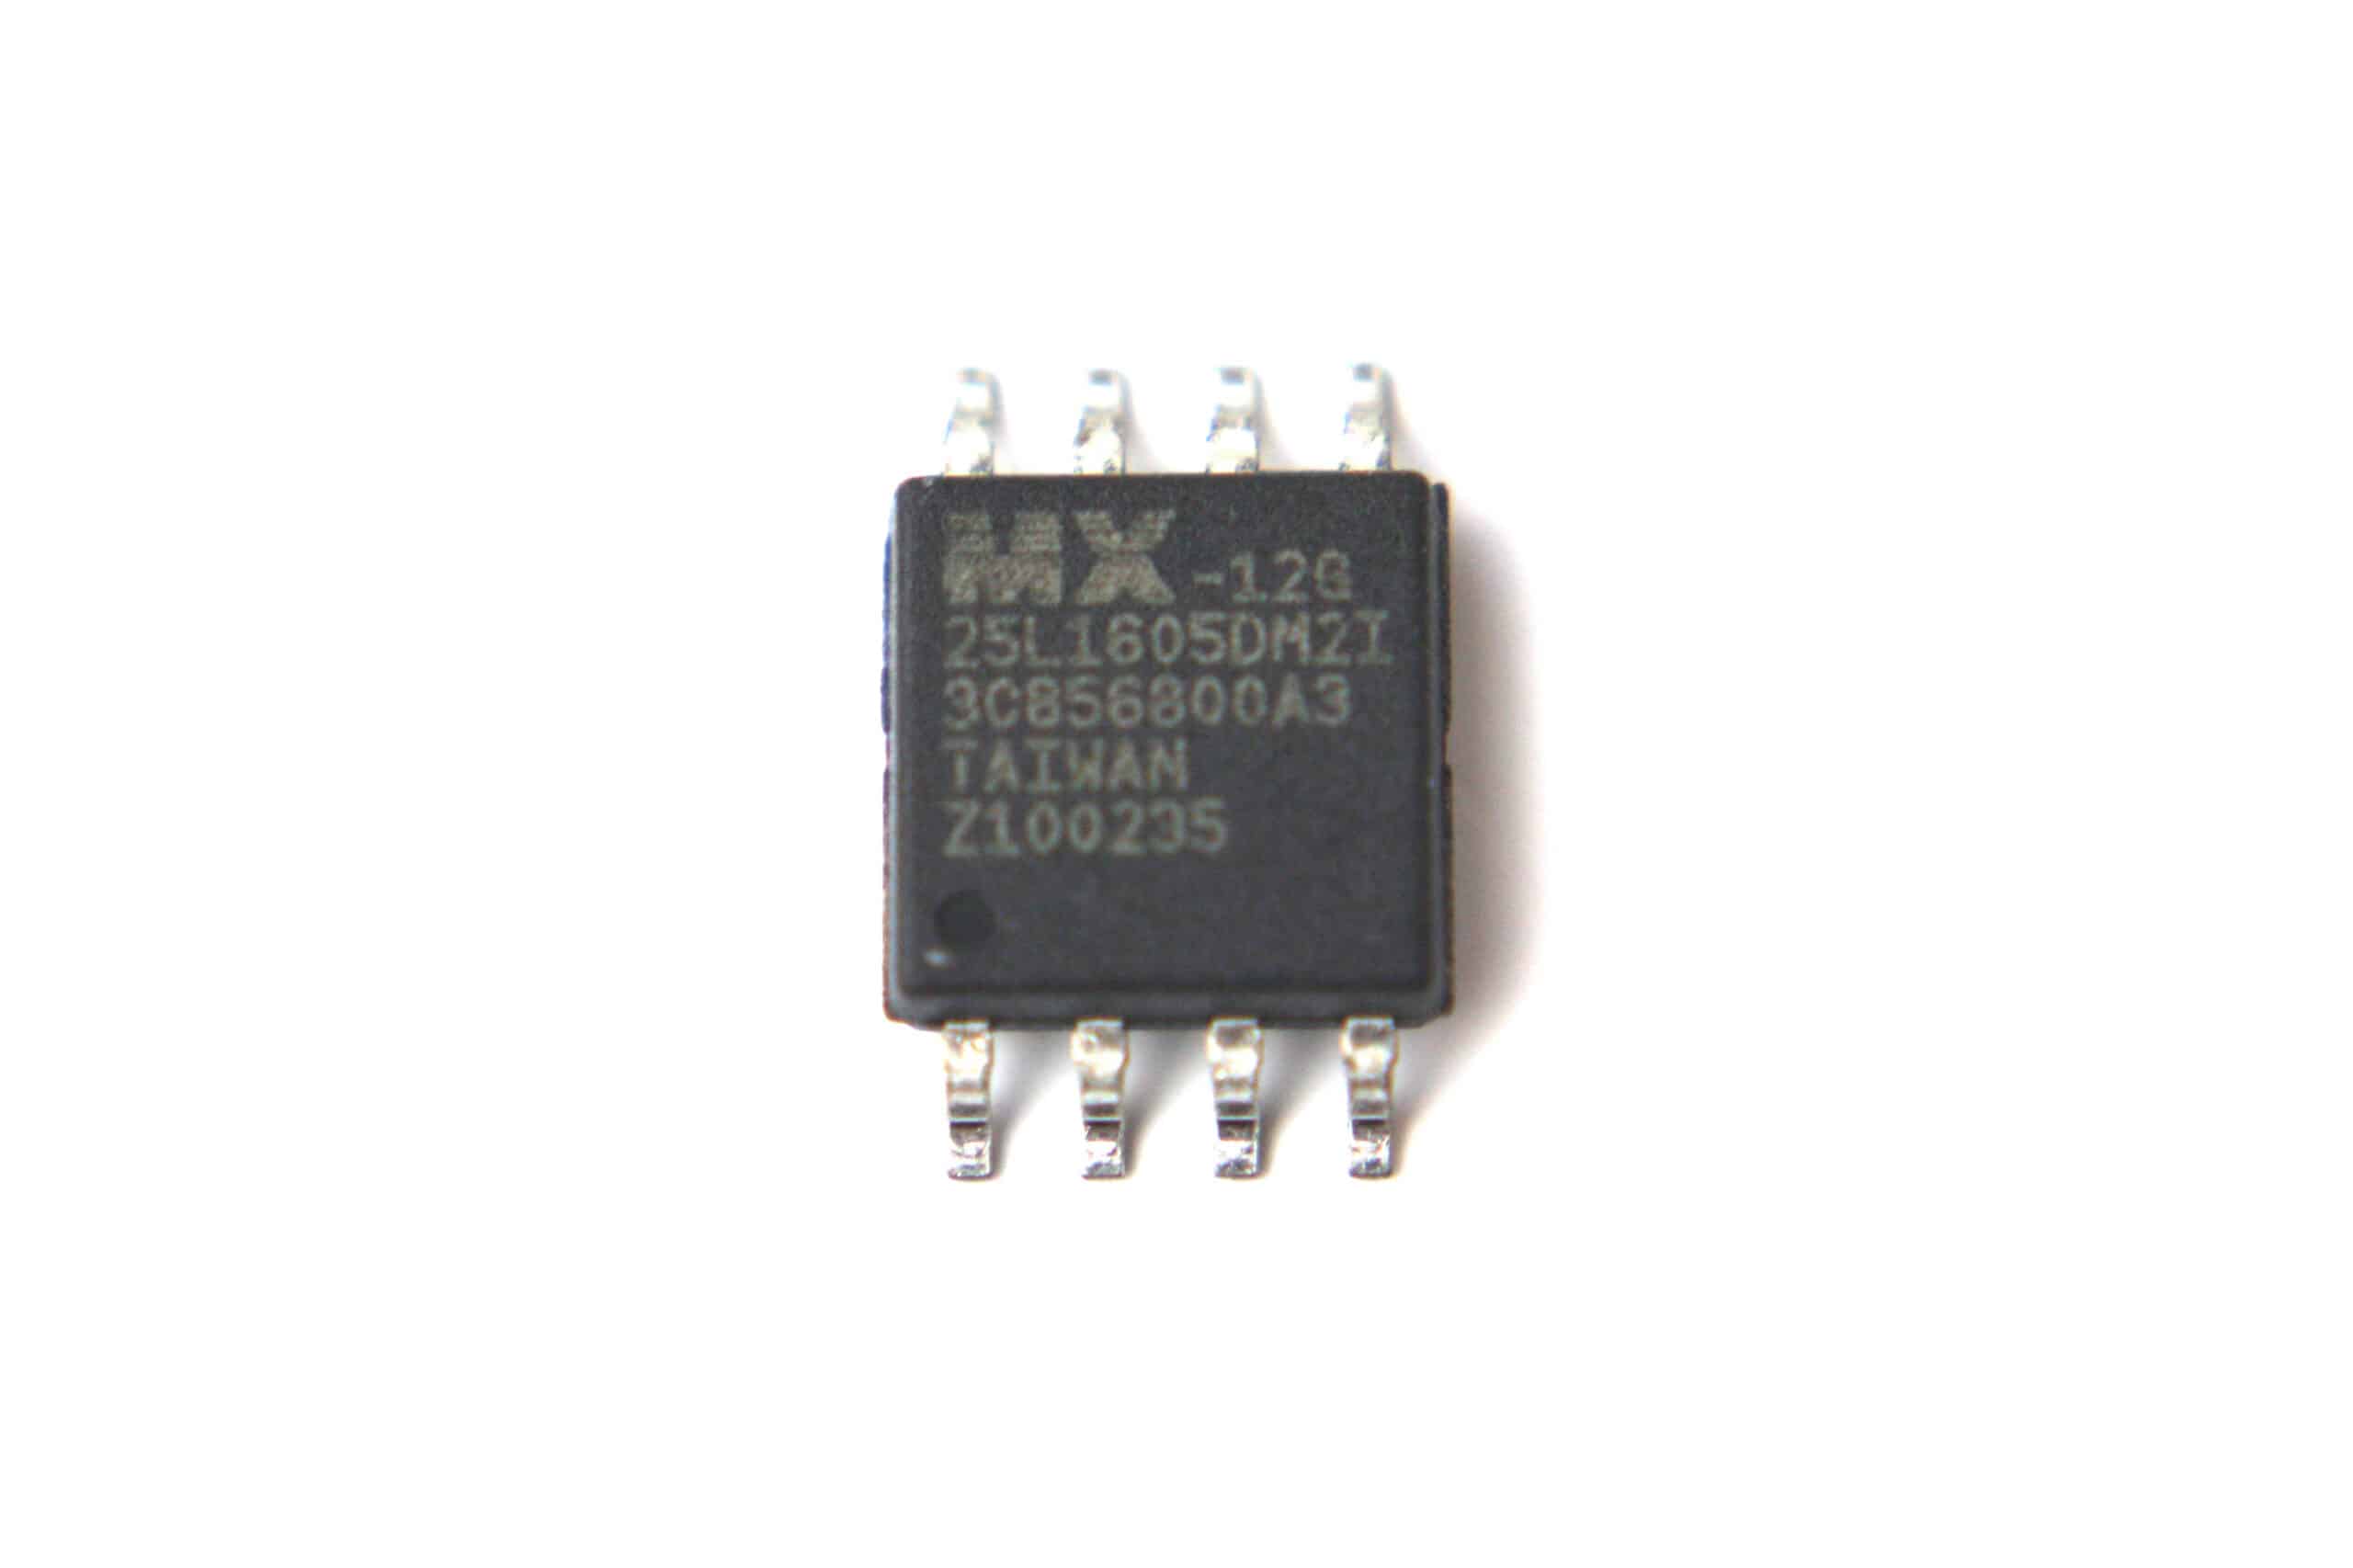 2x MACRONIX MXIC MX25L1605DM2I-12Z SERIAL FLASH MEMORY BIOS CHIP